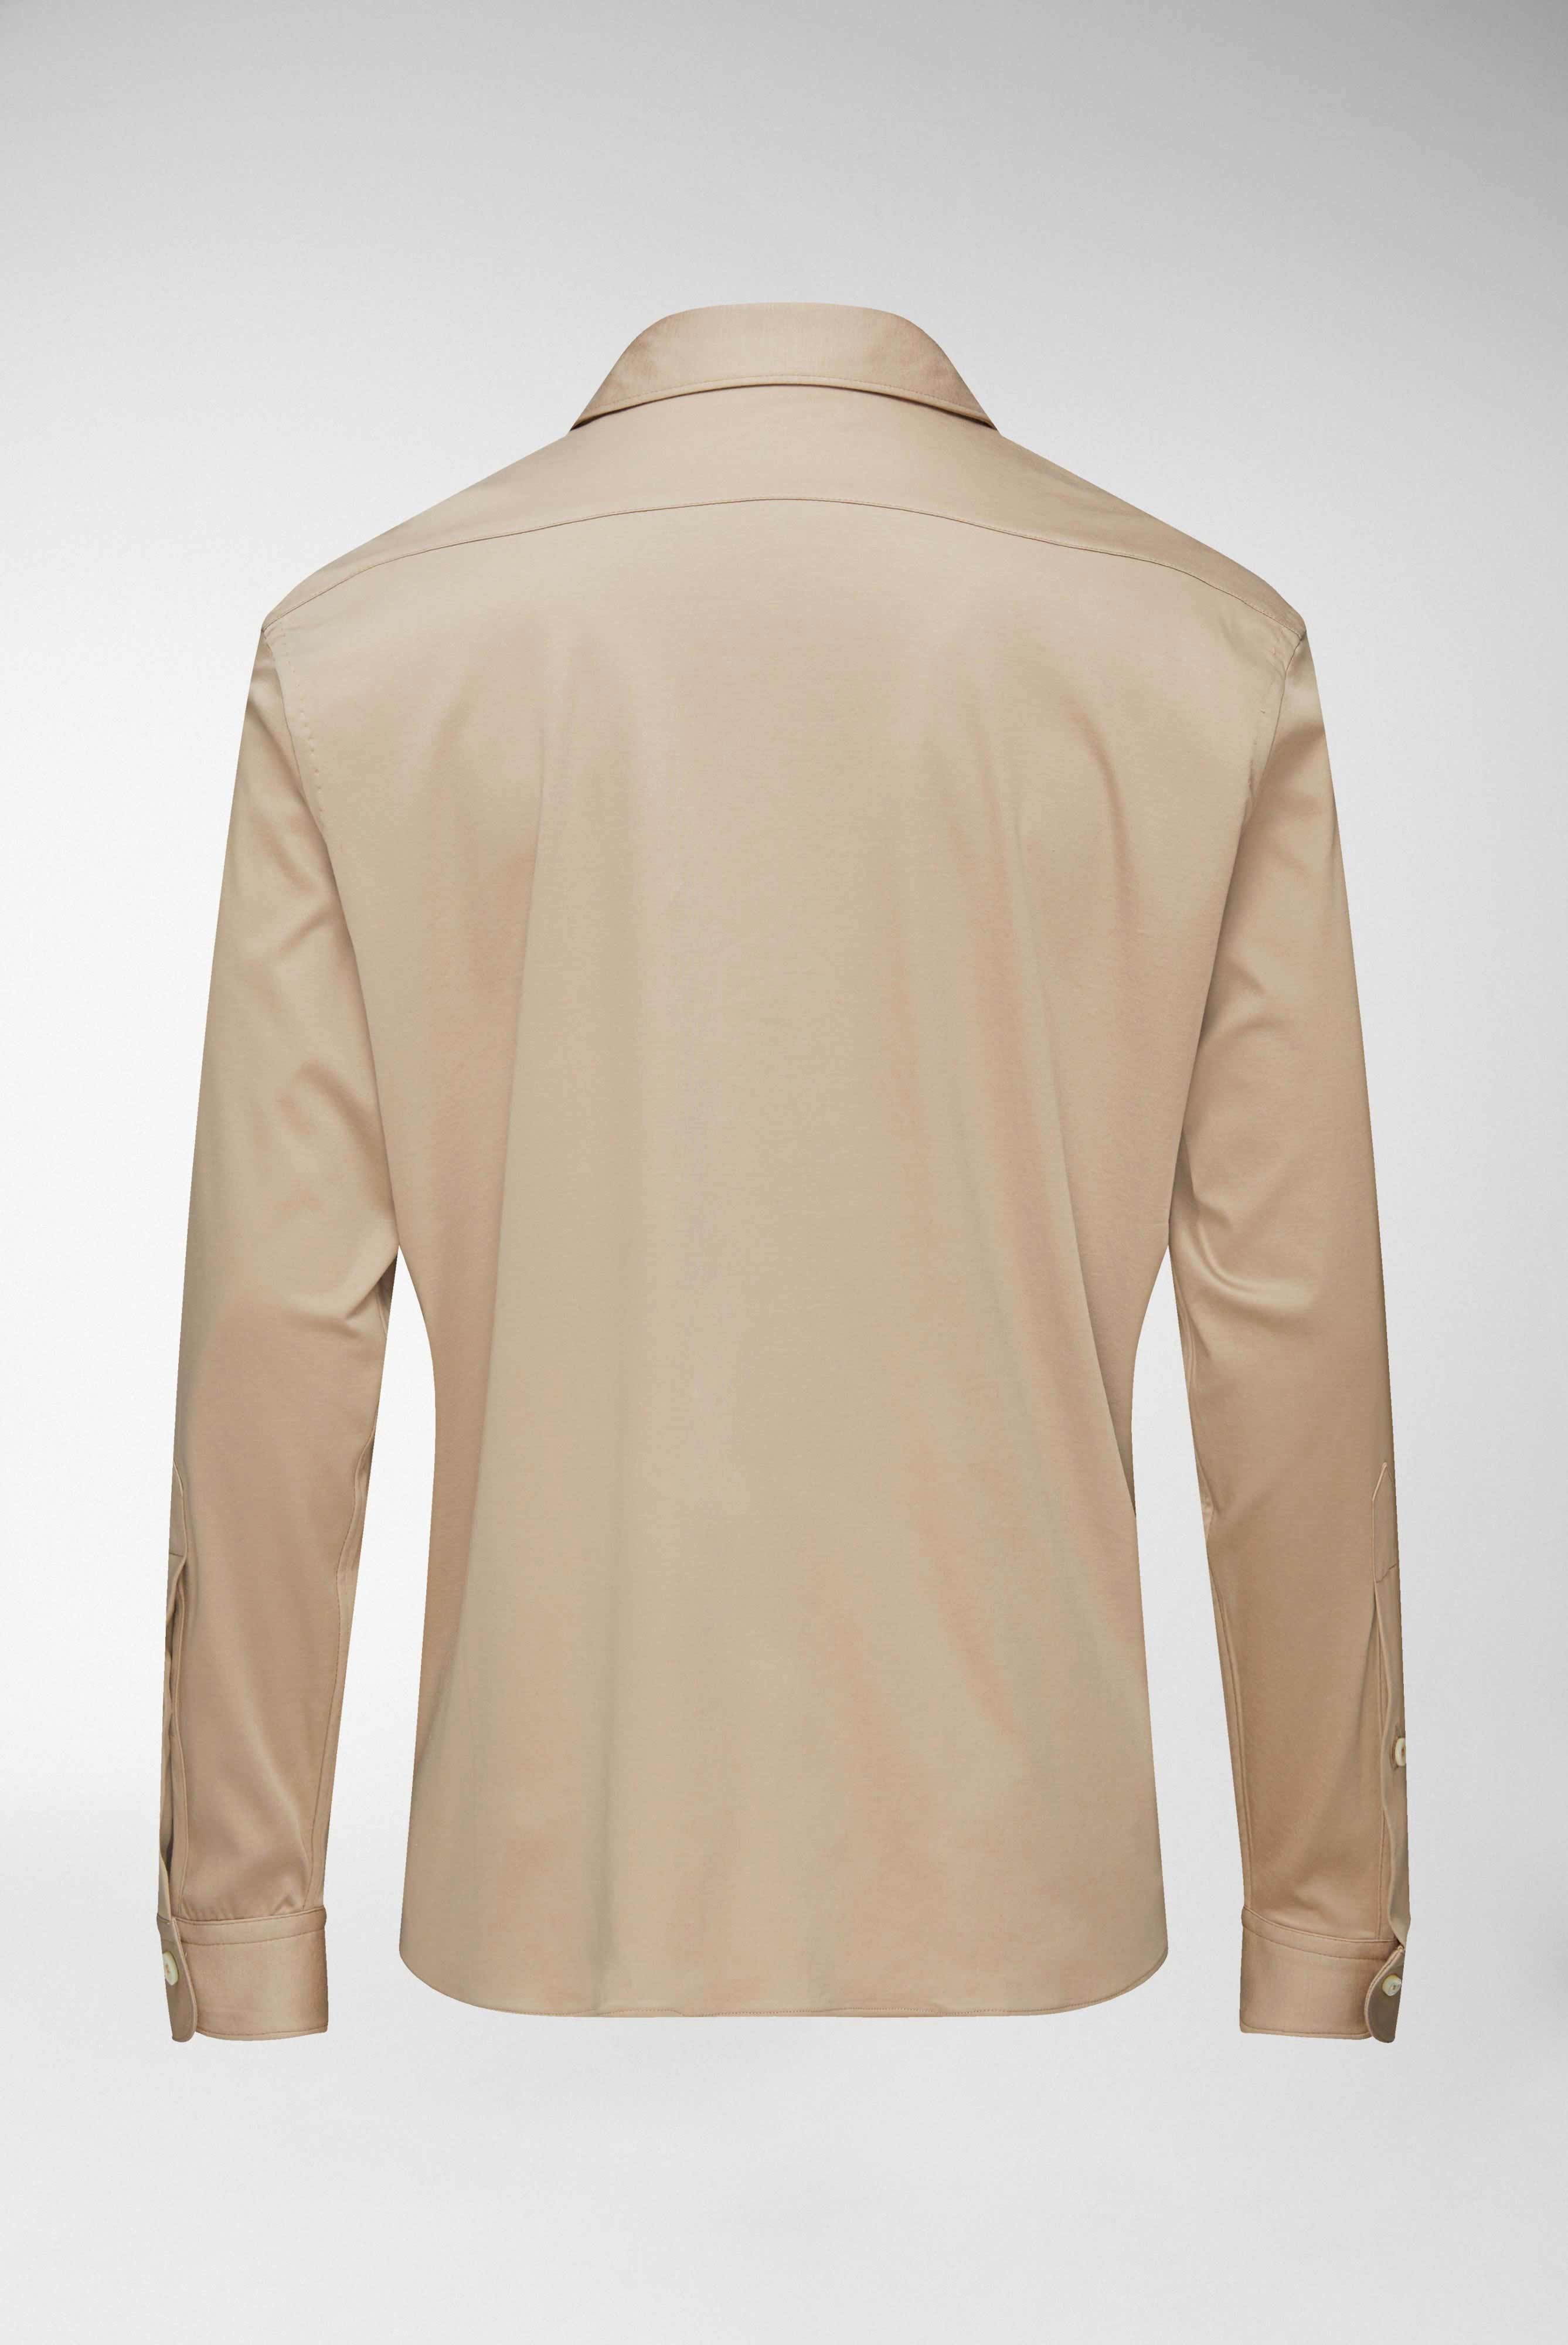 Casual Hemden+Jersey Hemd aus Schweizer Baumwolle Tailor Fit+20.1683.UC.180031.140.X4L